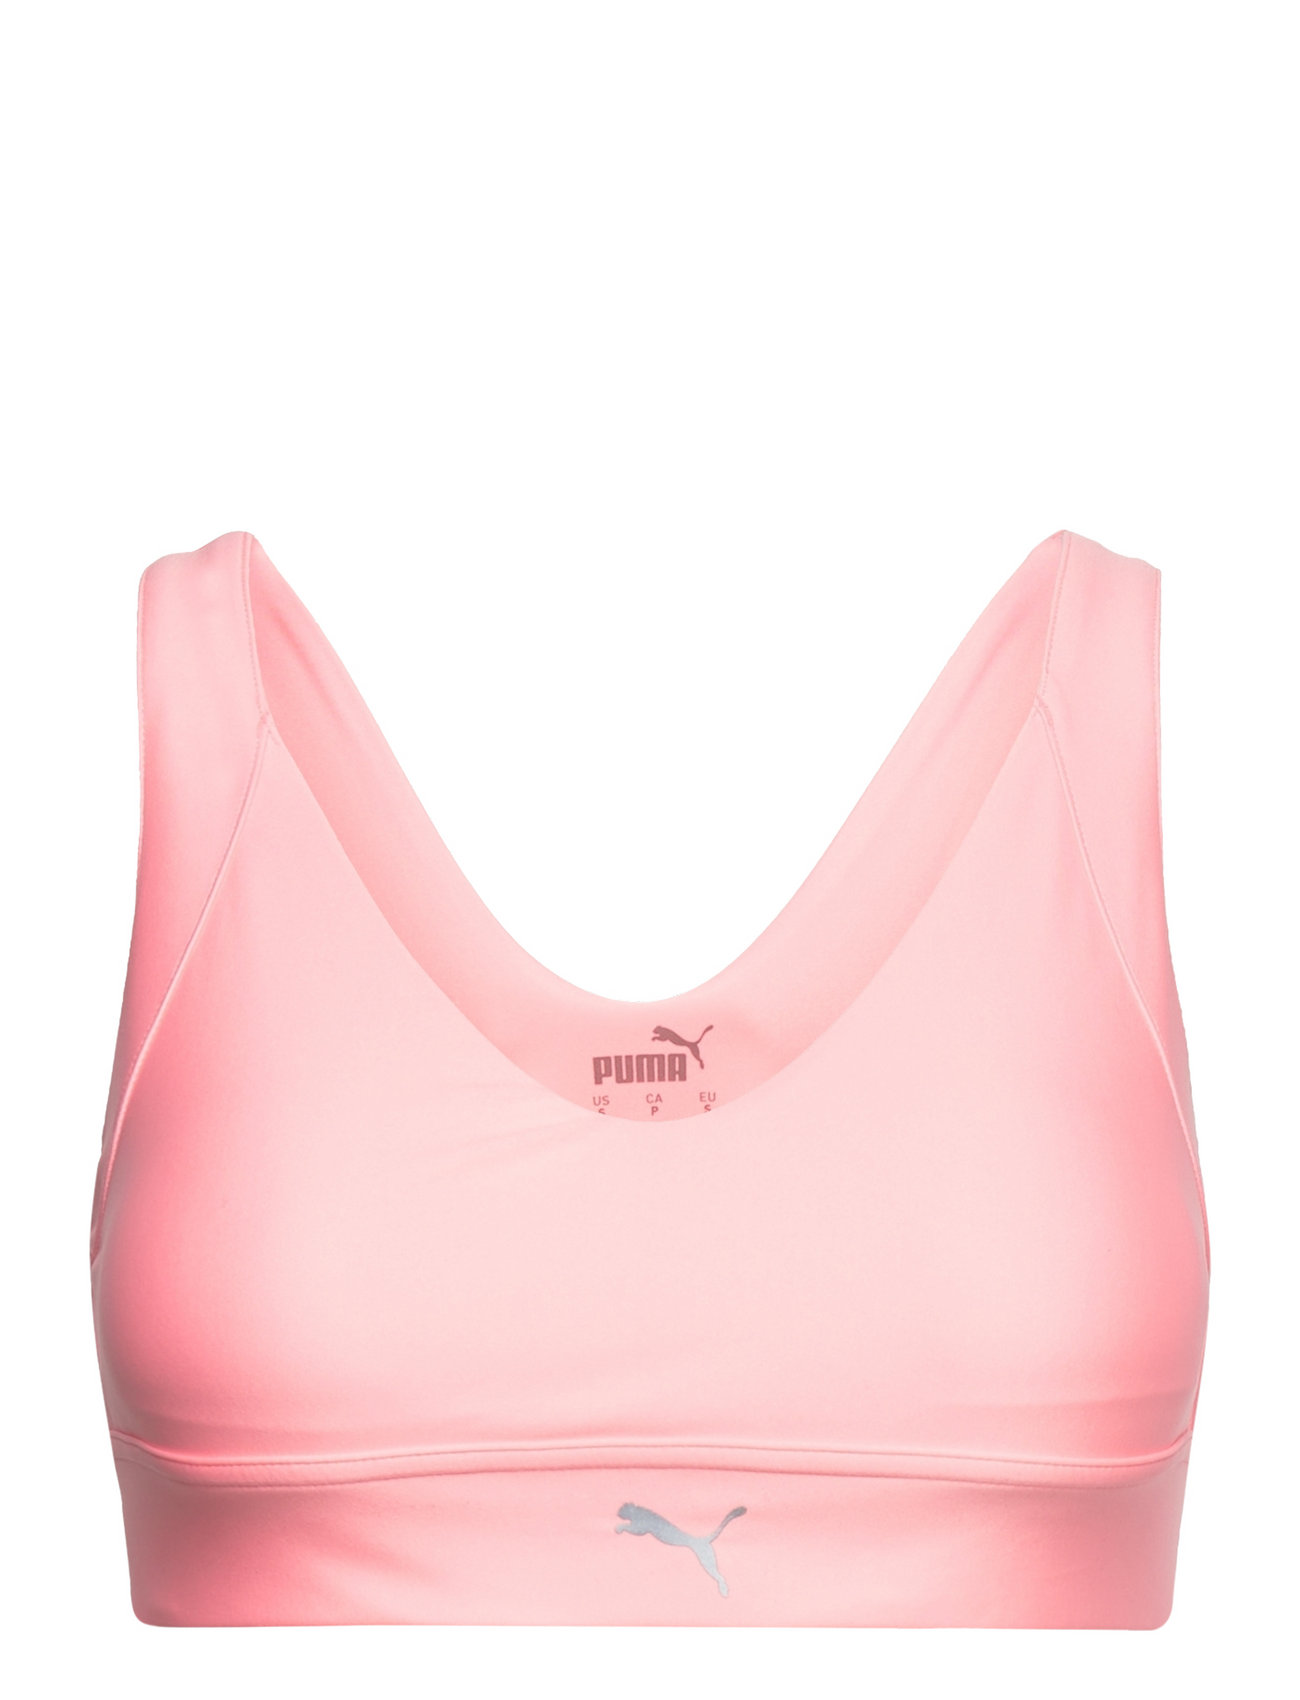 PUMA High Impact Ultraform Running Bra – bras – shop at Booztlet